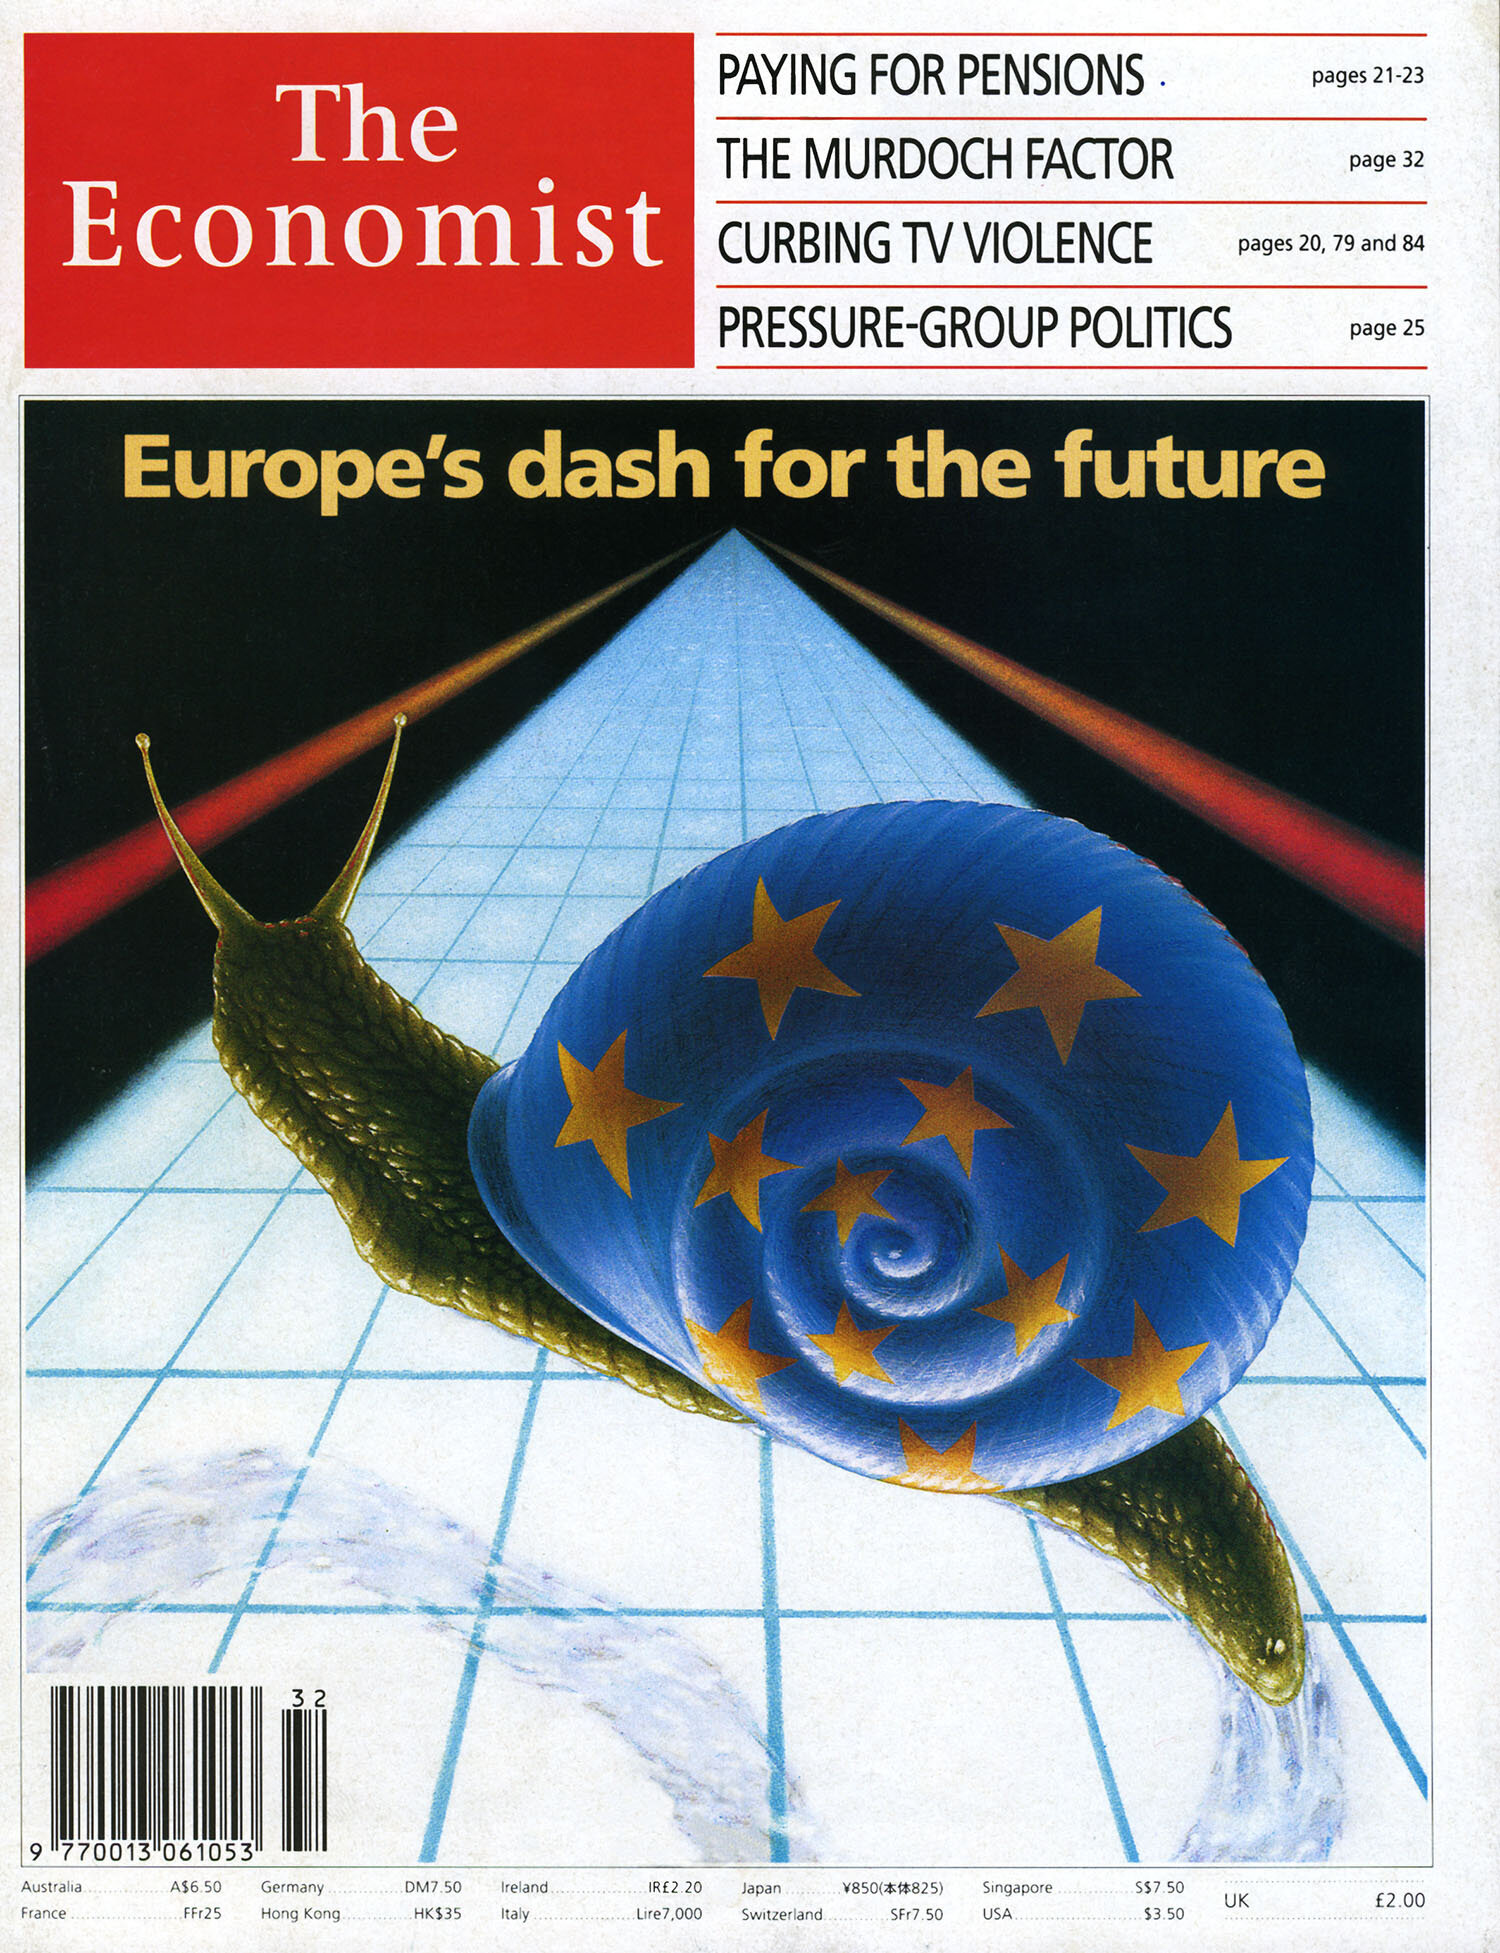  The Economist magazine front cover.    